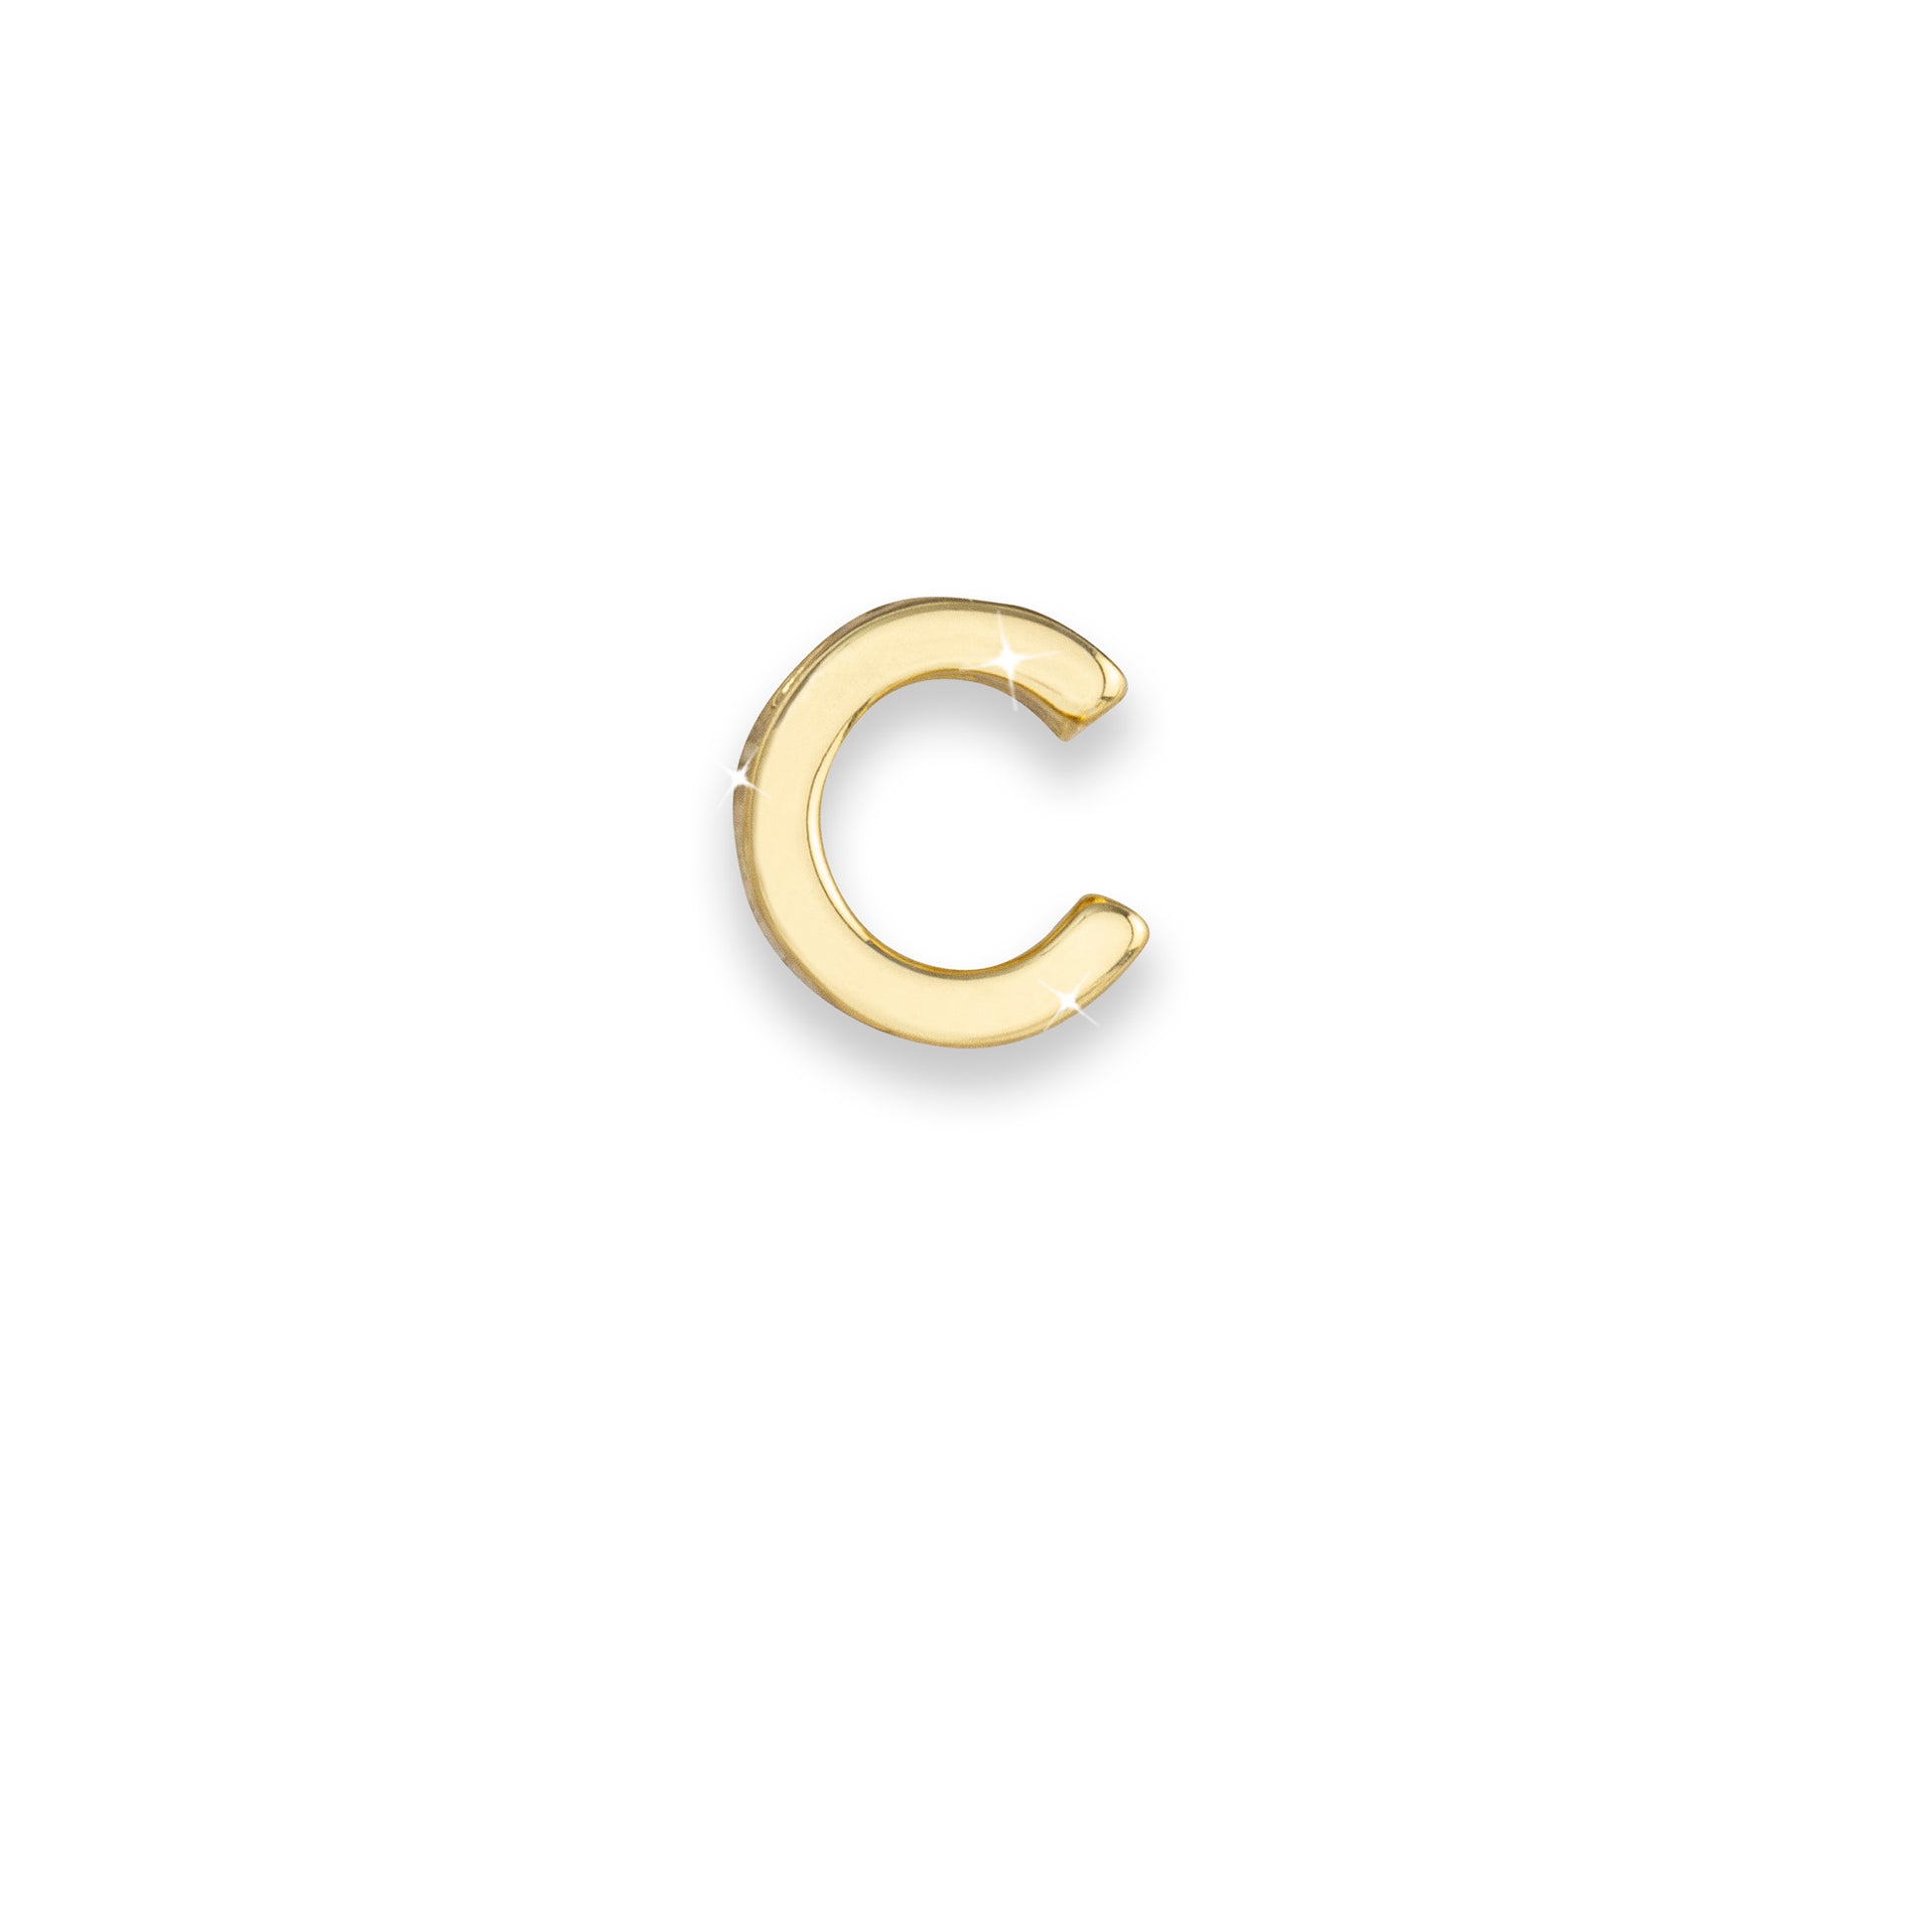 Gold letter C monogram charm for necklaces & bracelets